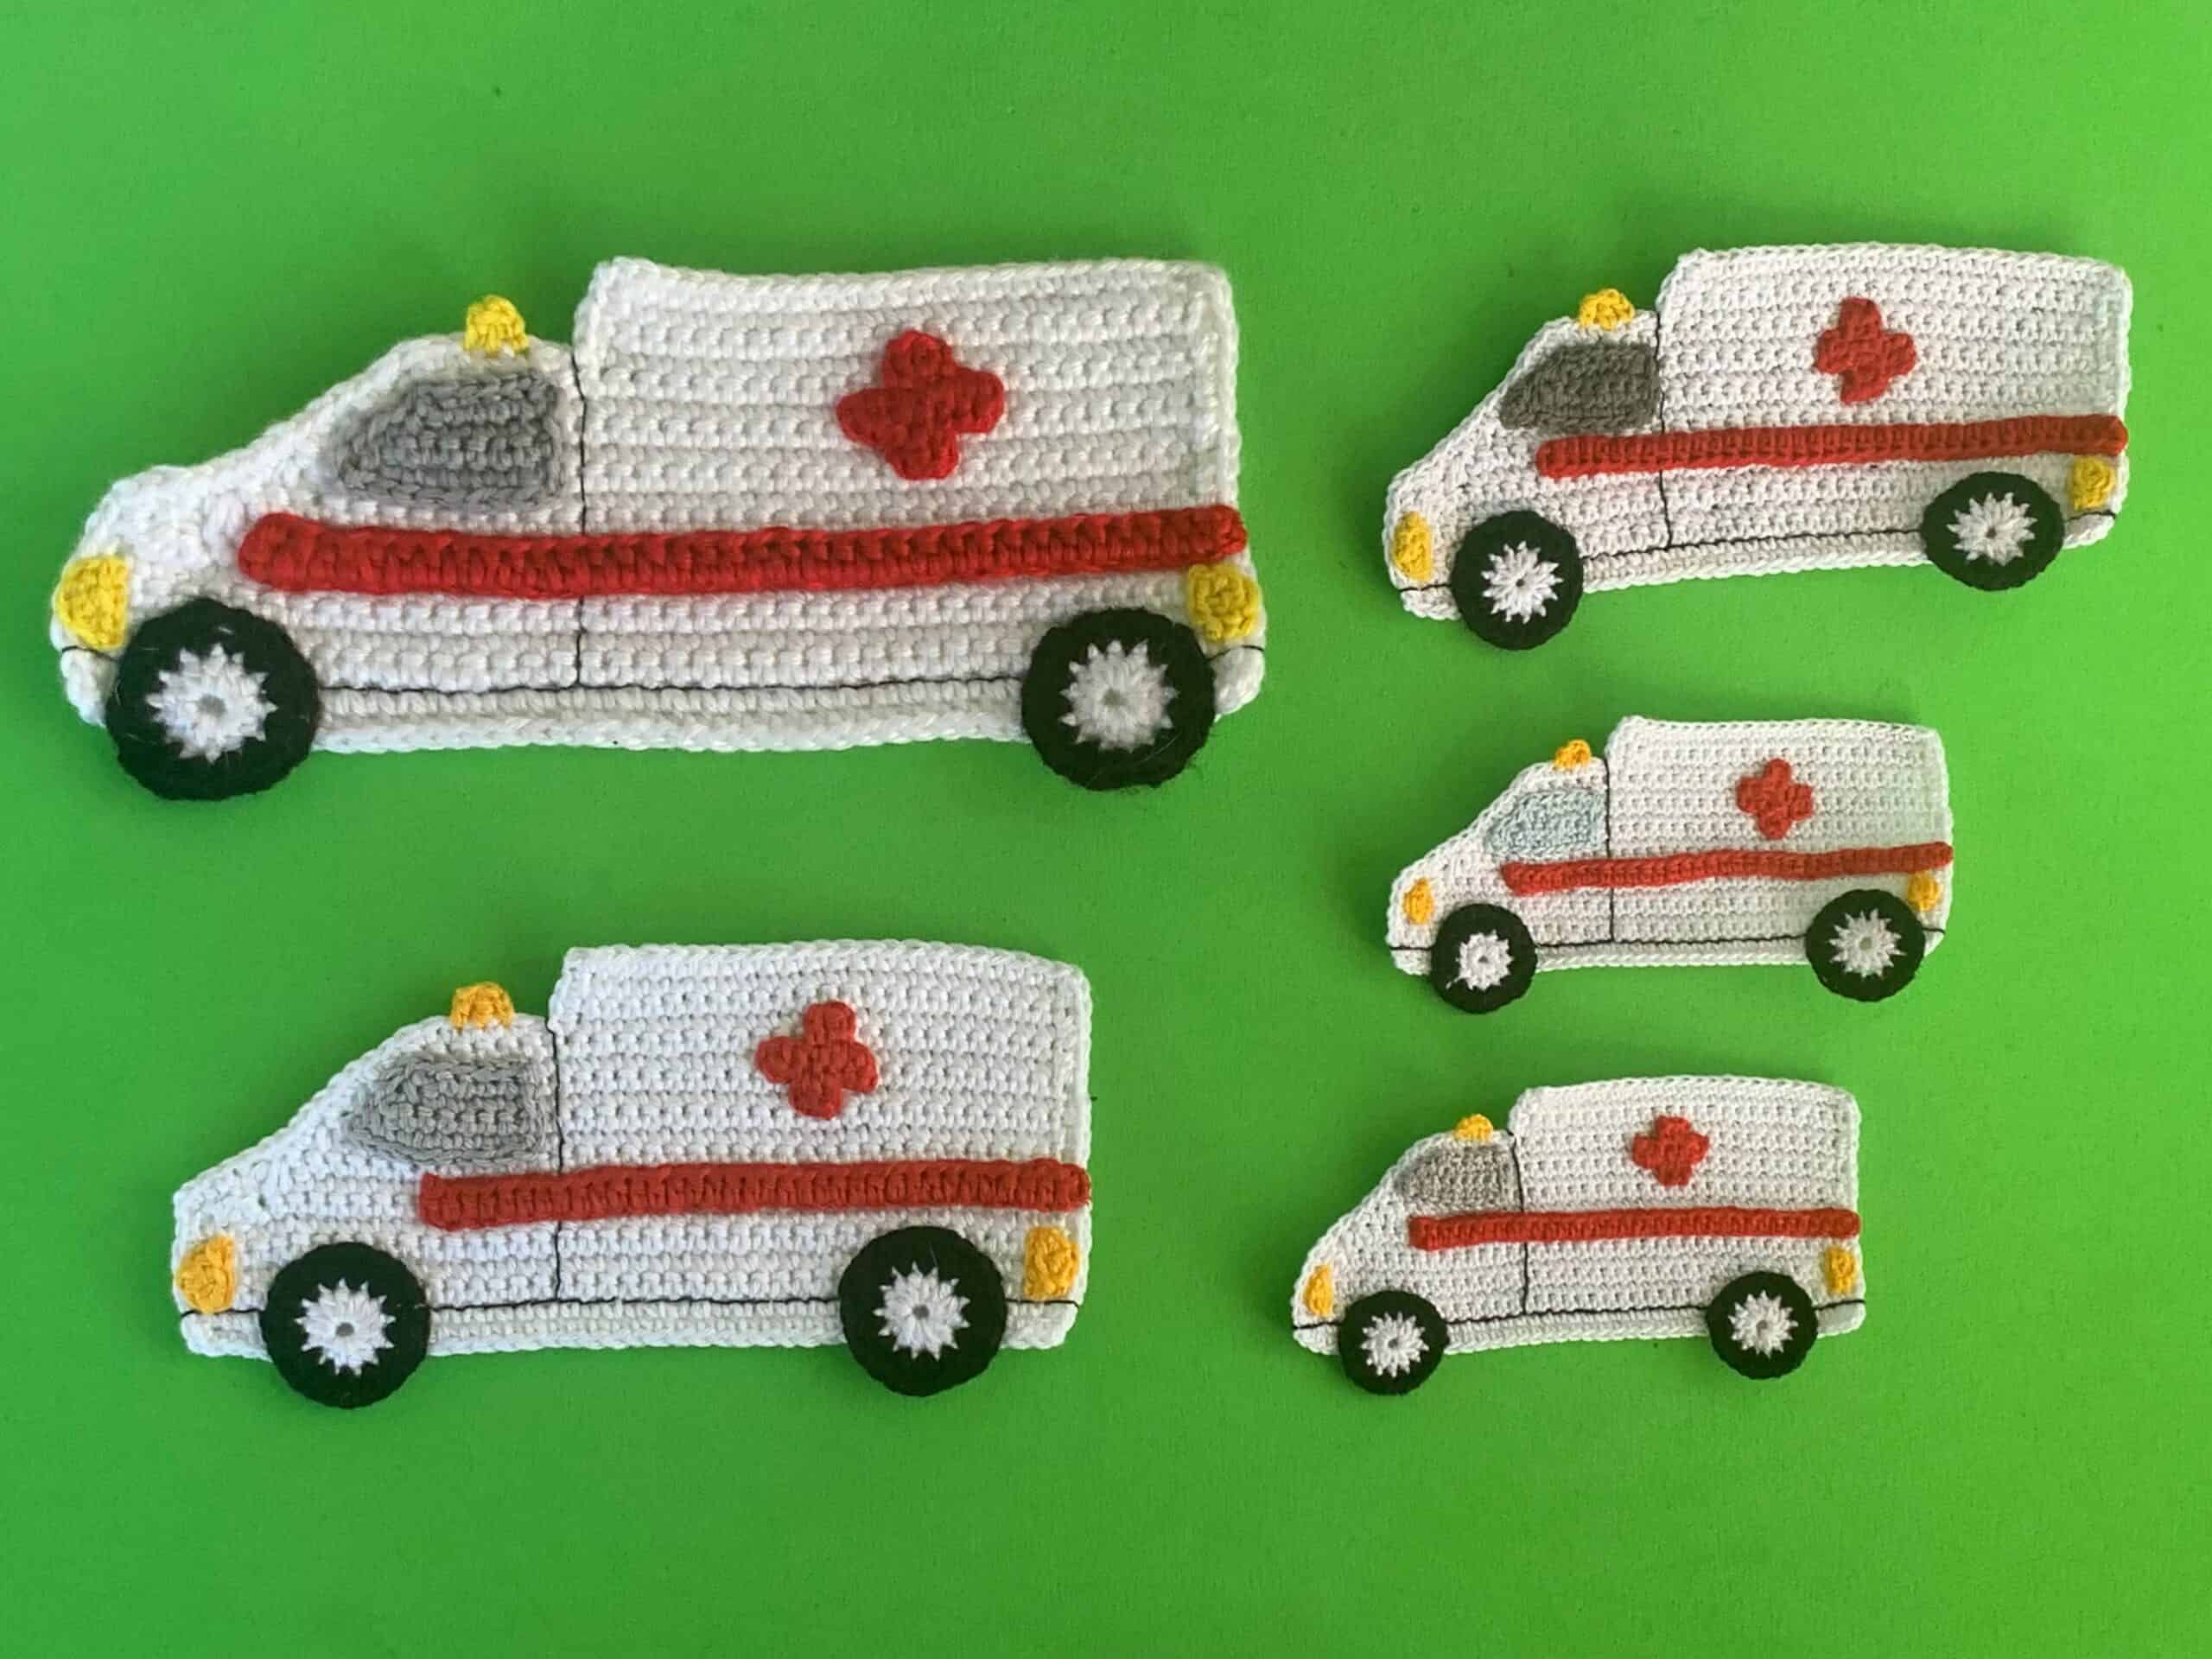 Finished crochet ambulance 2 ply group landscape